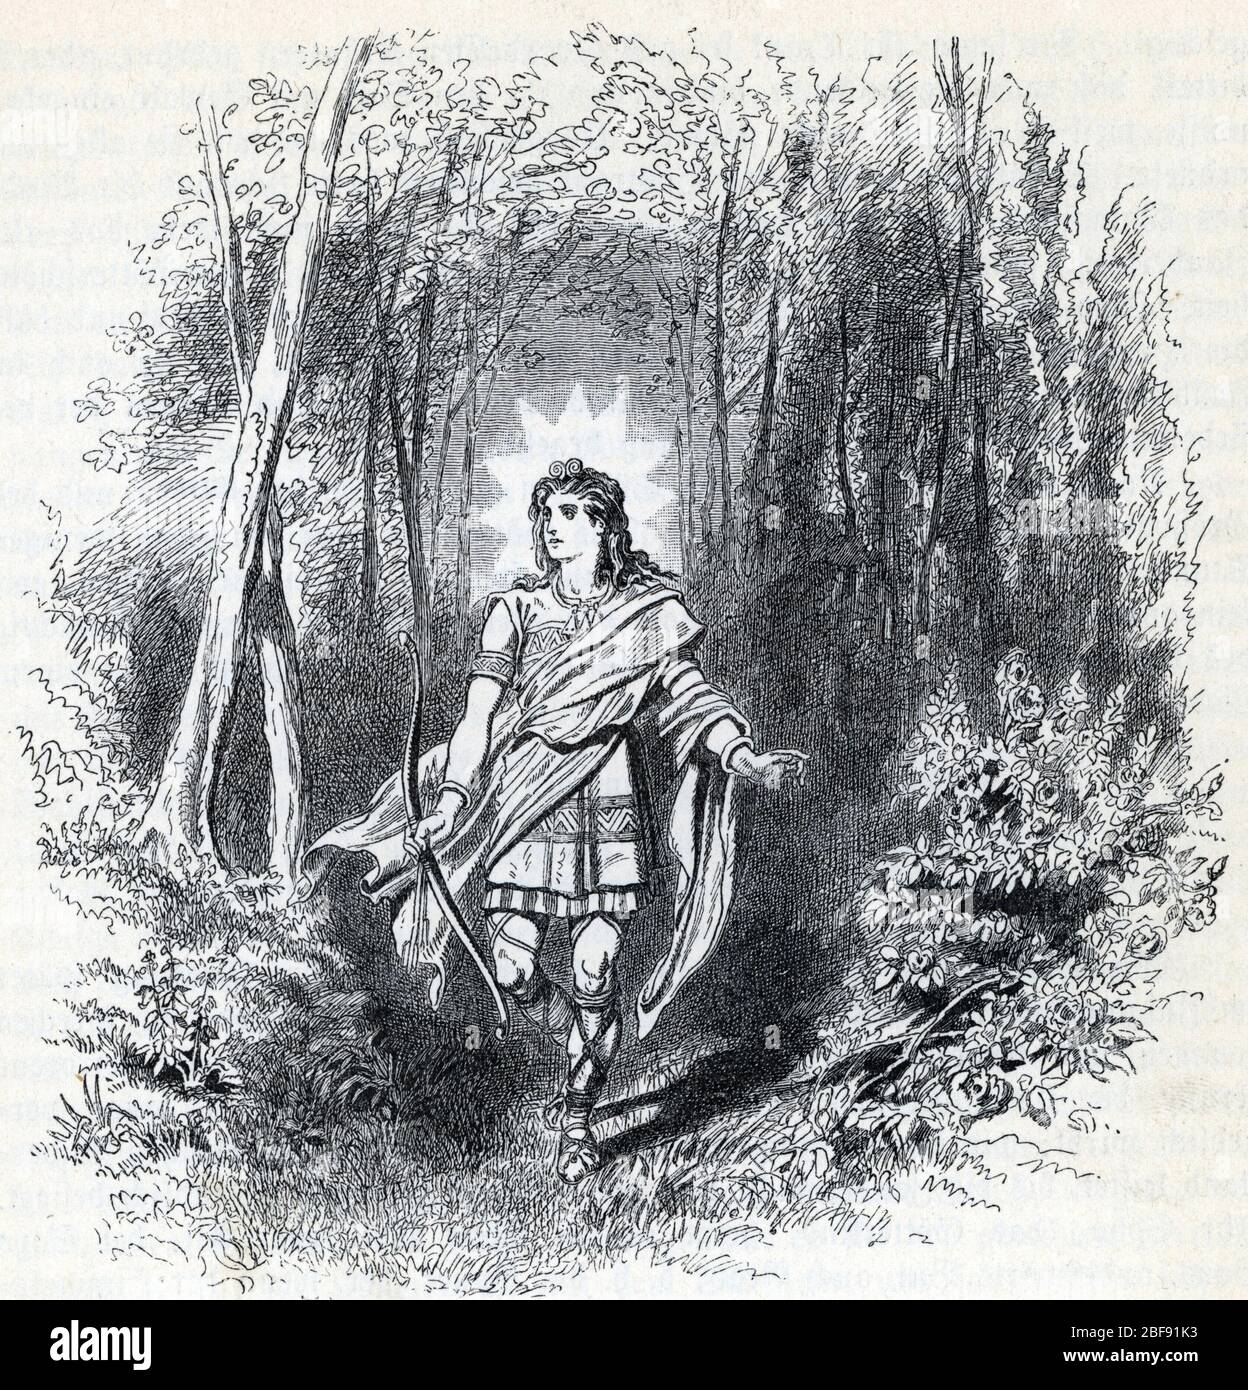 Mythologie nordique : Vali (Ali ou Wali) fils d'Odin (nordische Mythologie : Vali ist ein Sohn des gottes Odin und der Riesin Rindr) Gravure tiree de 'Nordis Stockfoto